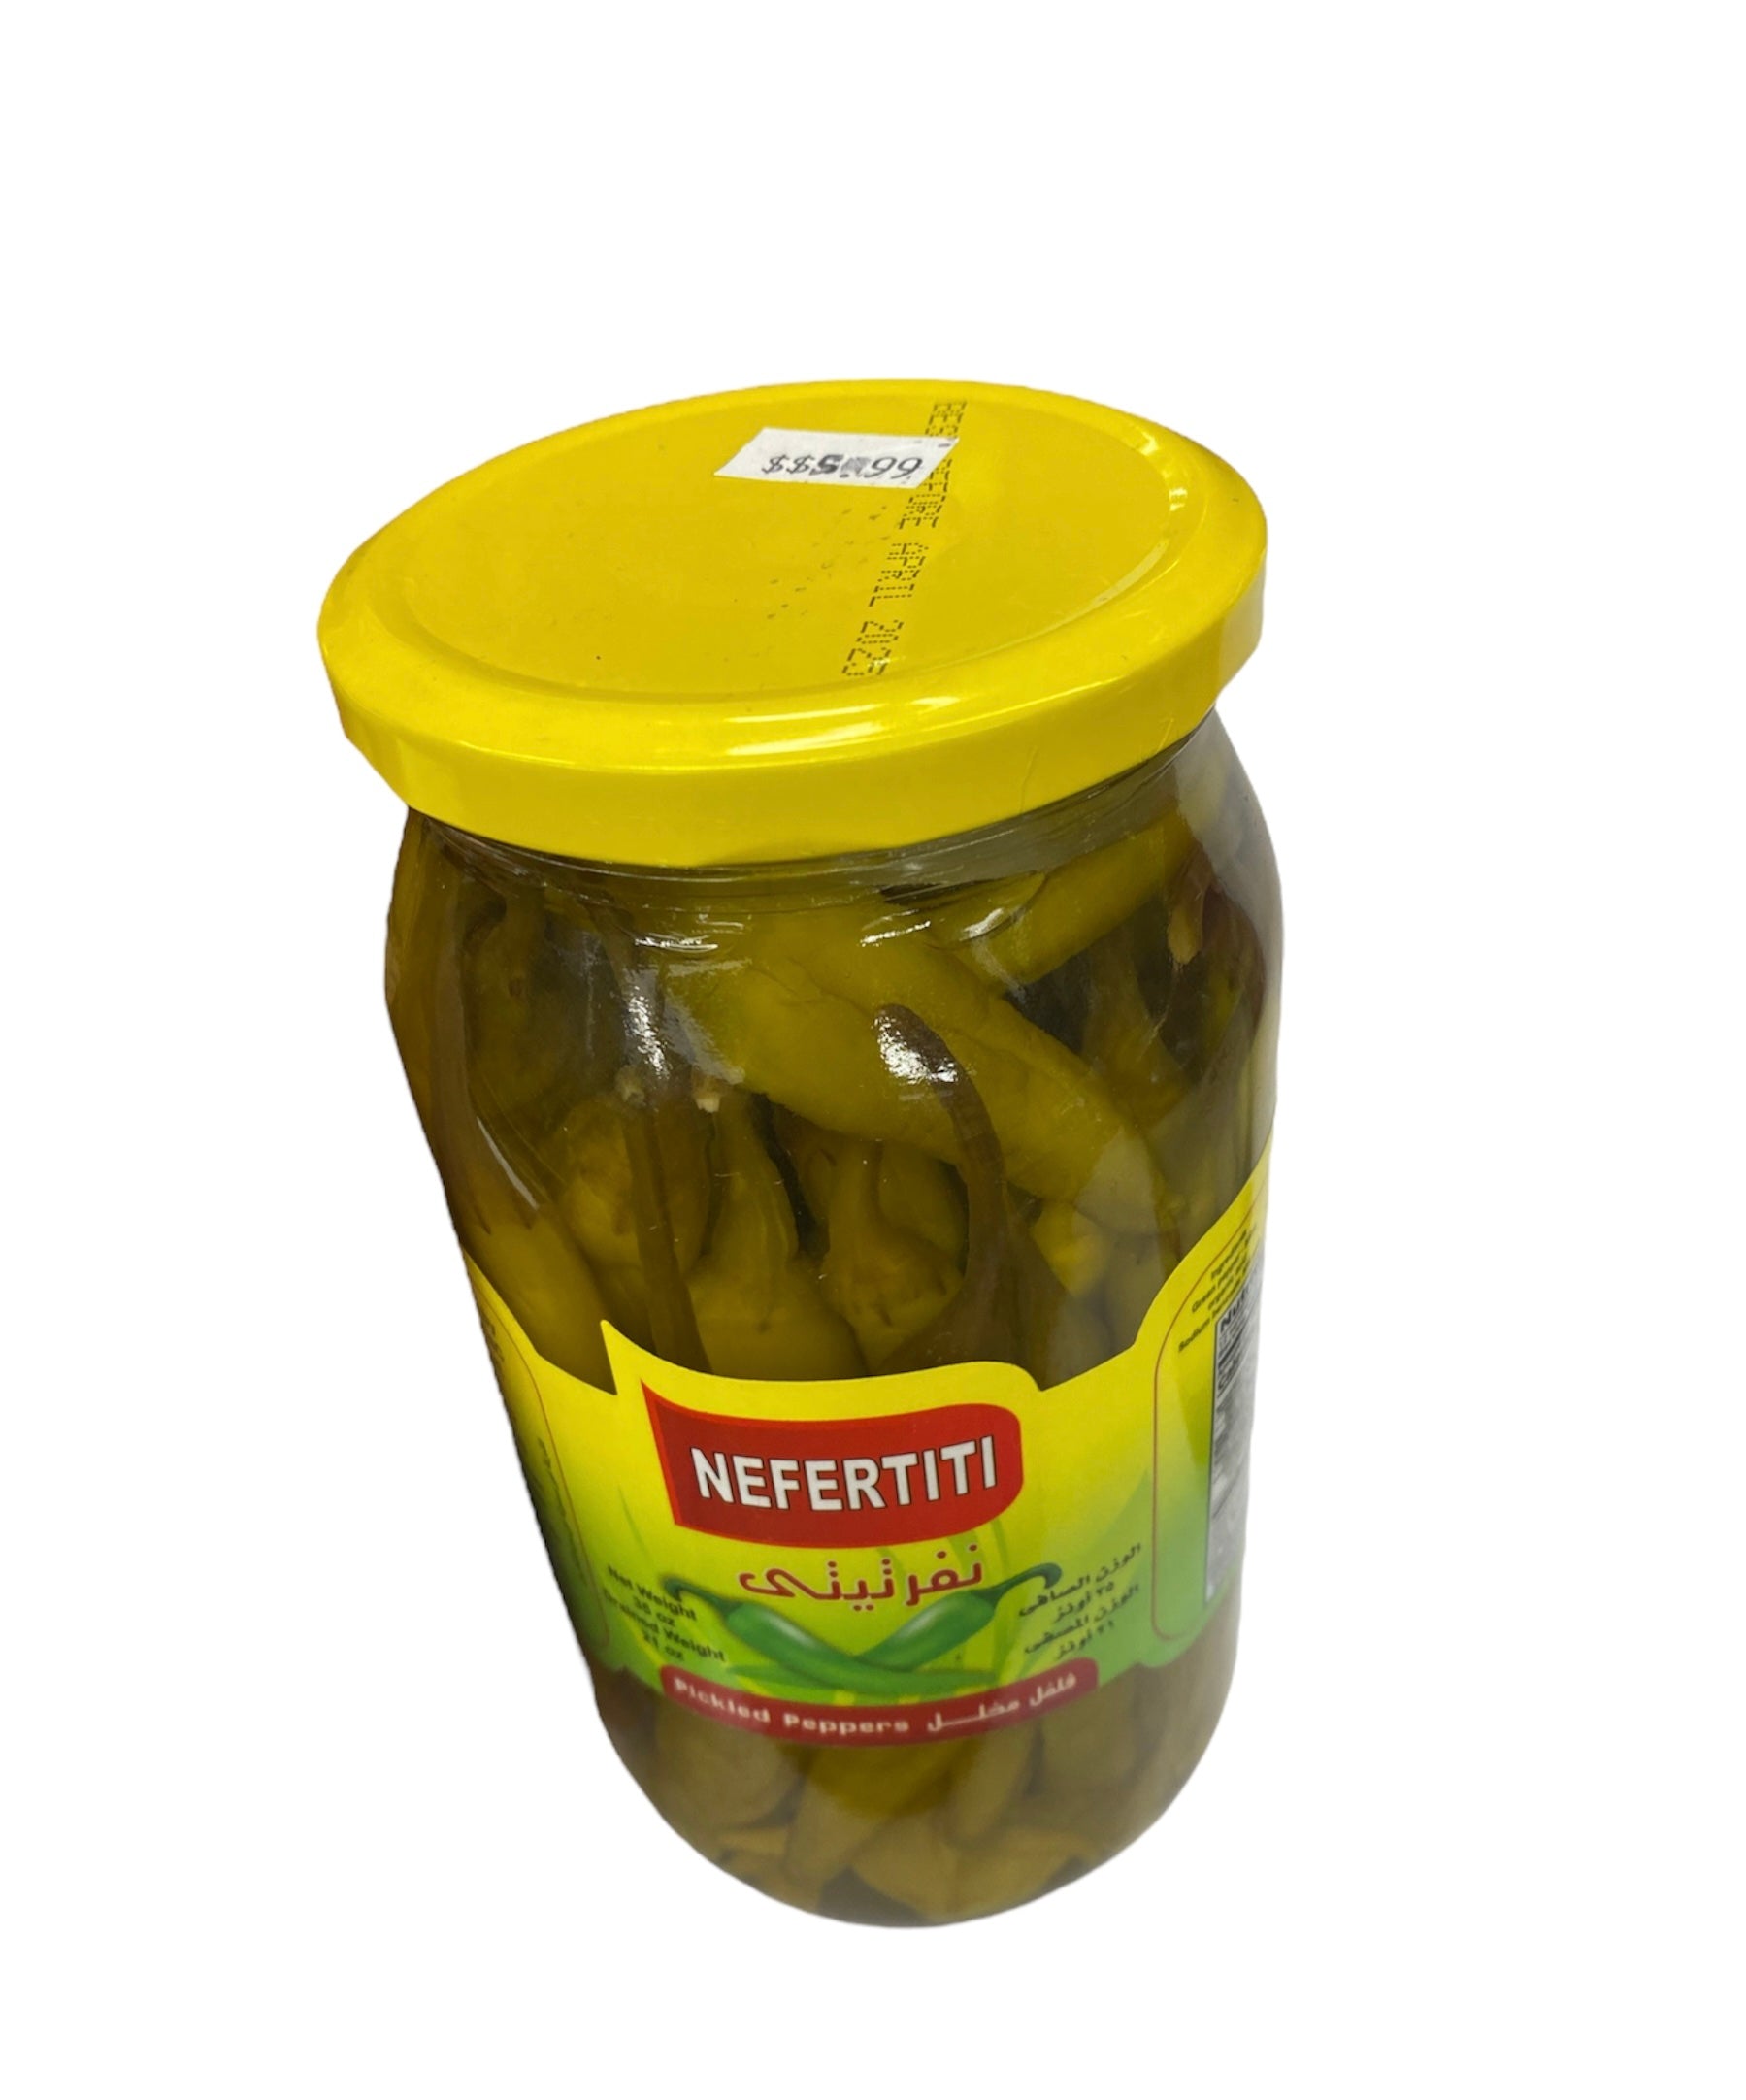 Nefertiti pickled peppers